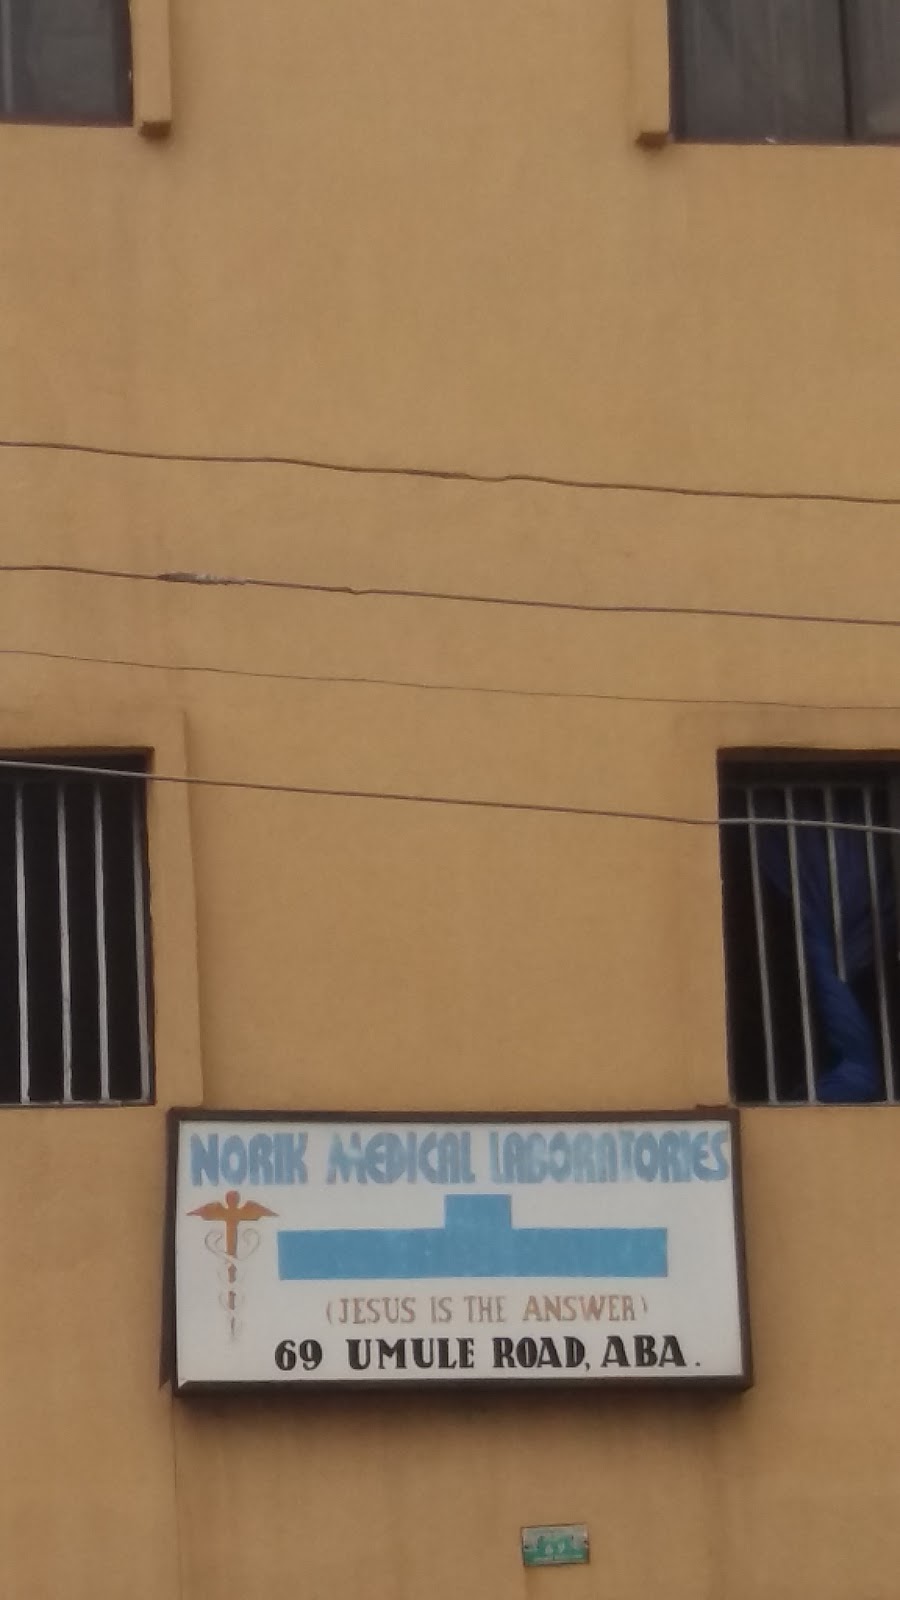 Norik Medical Laboratory